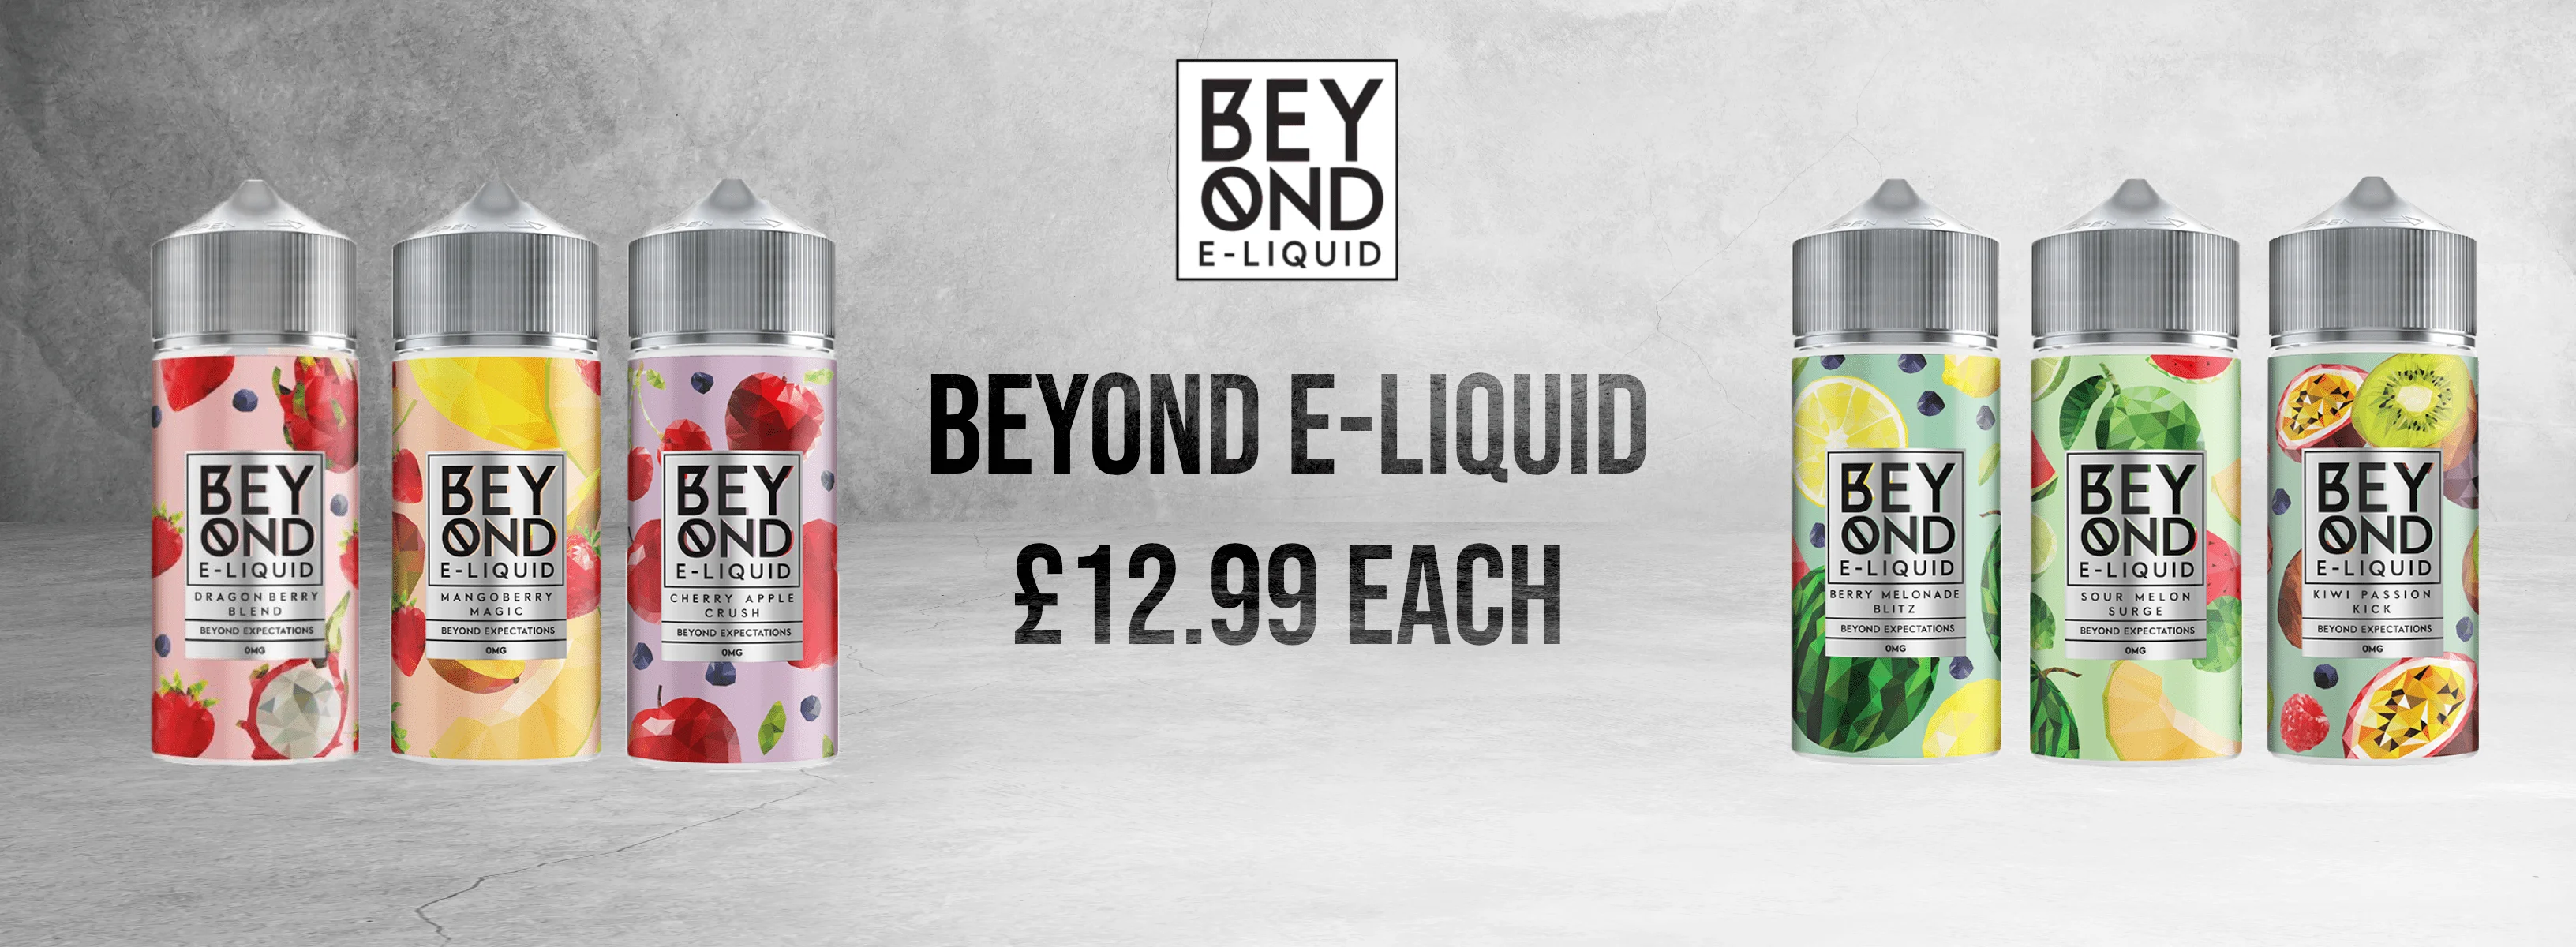 Advert for Beyond E-liquid